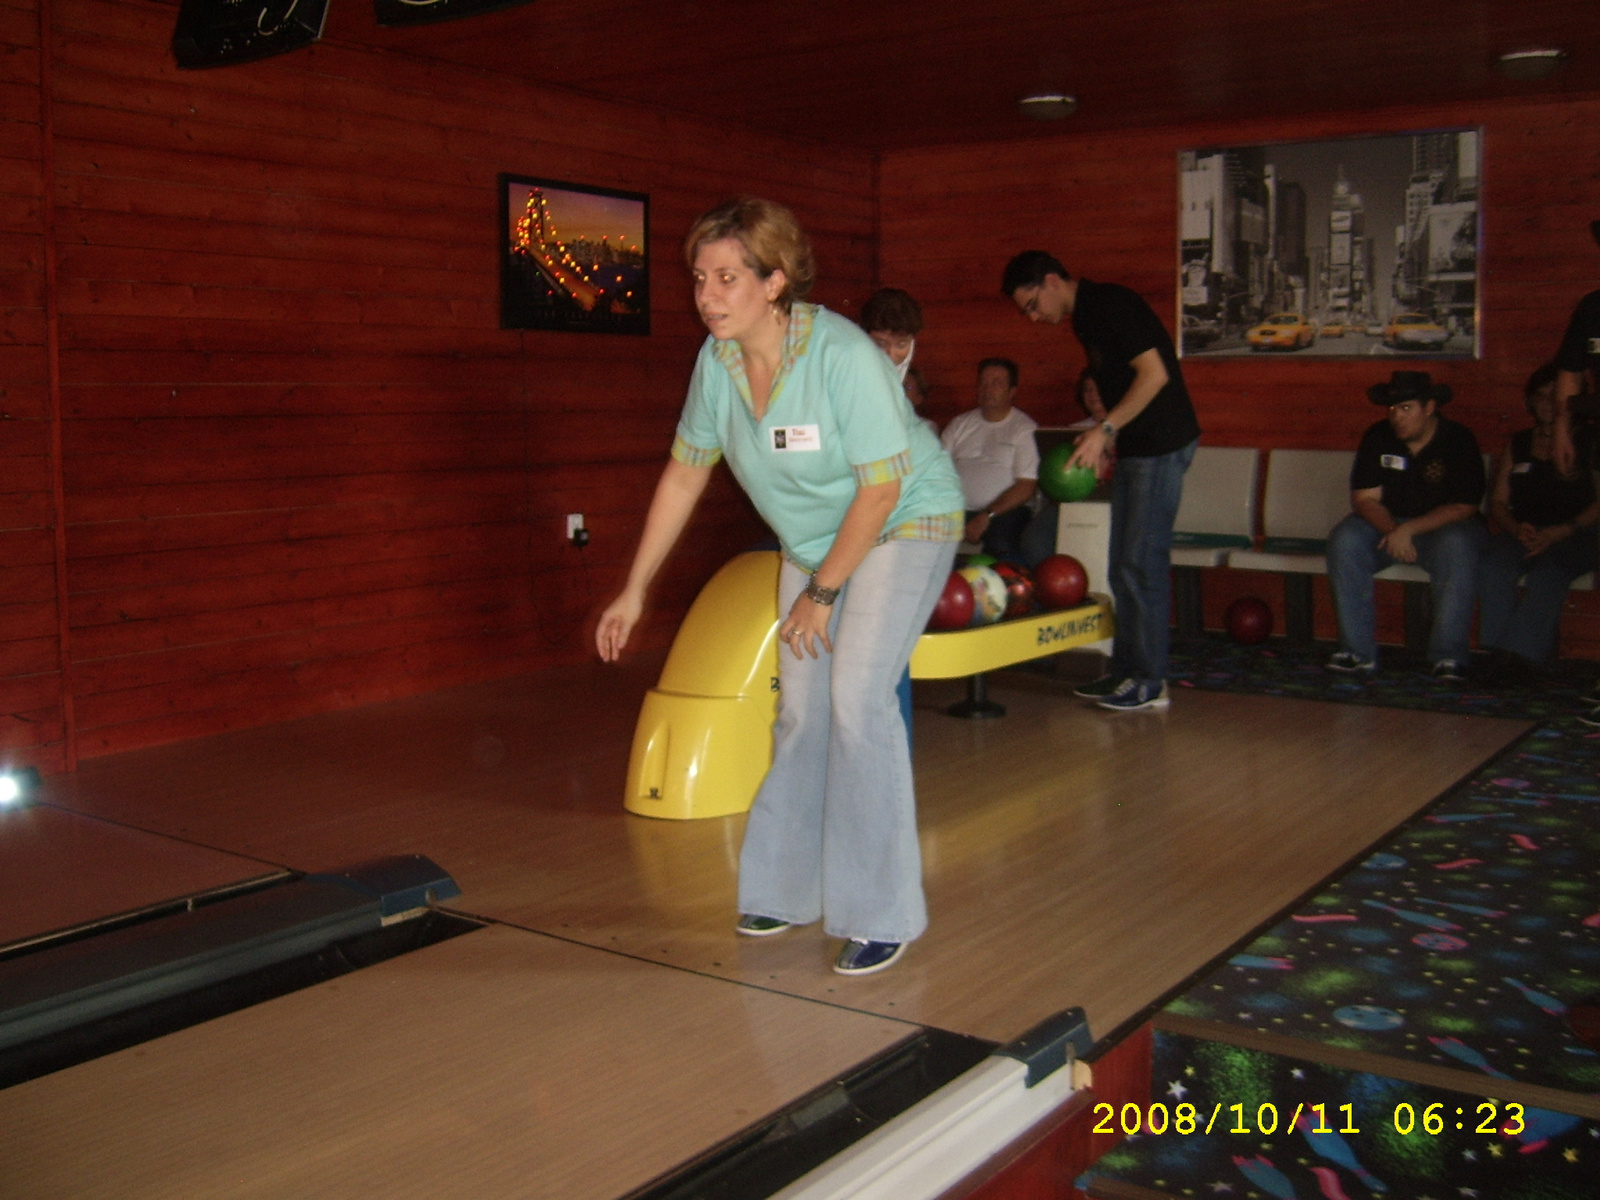 081011 Willams Western Village Bowling Linedance bajnokság 051